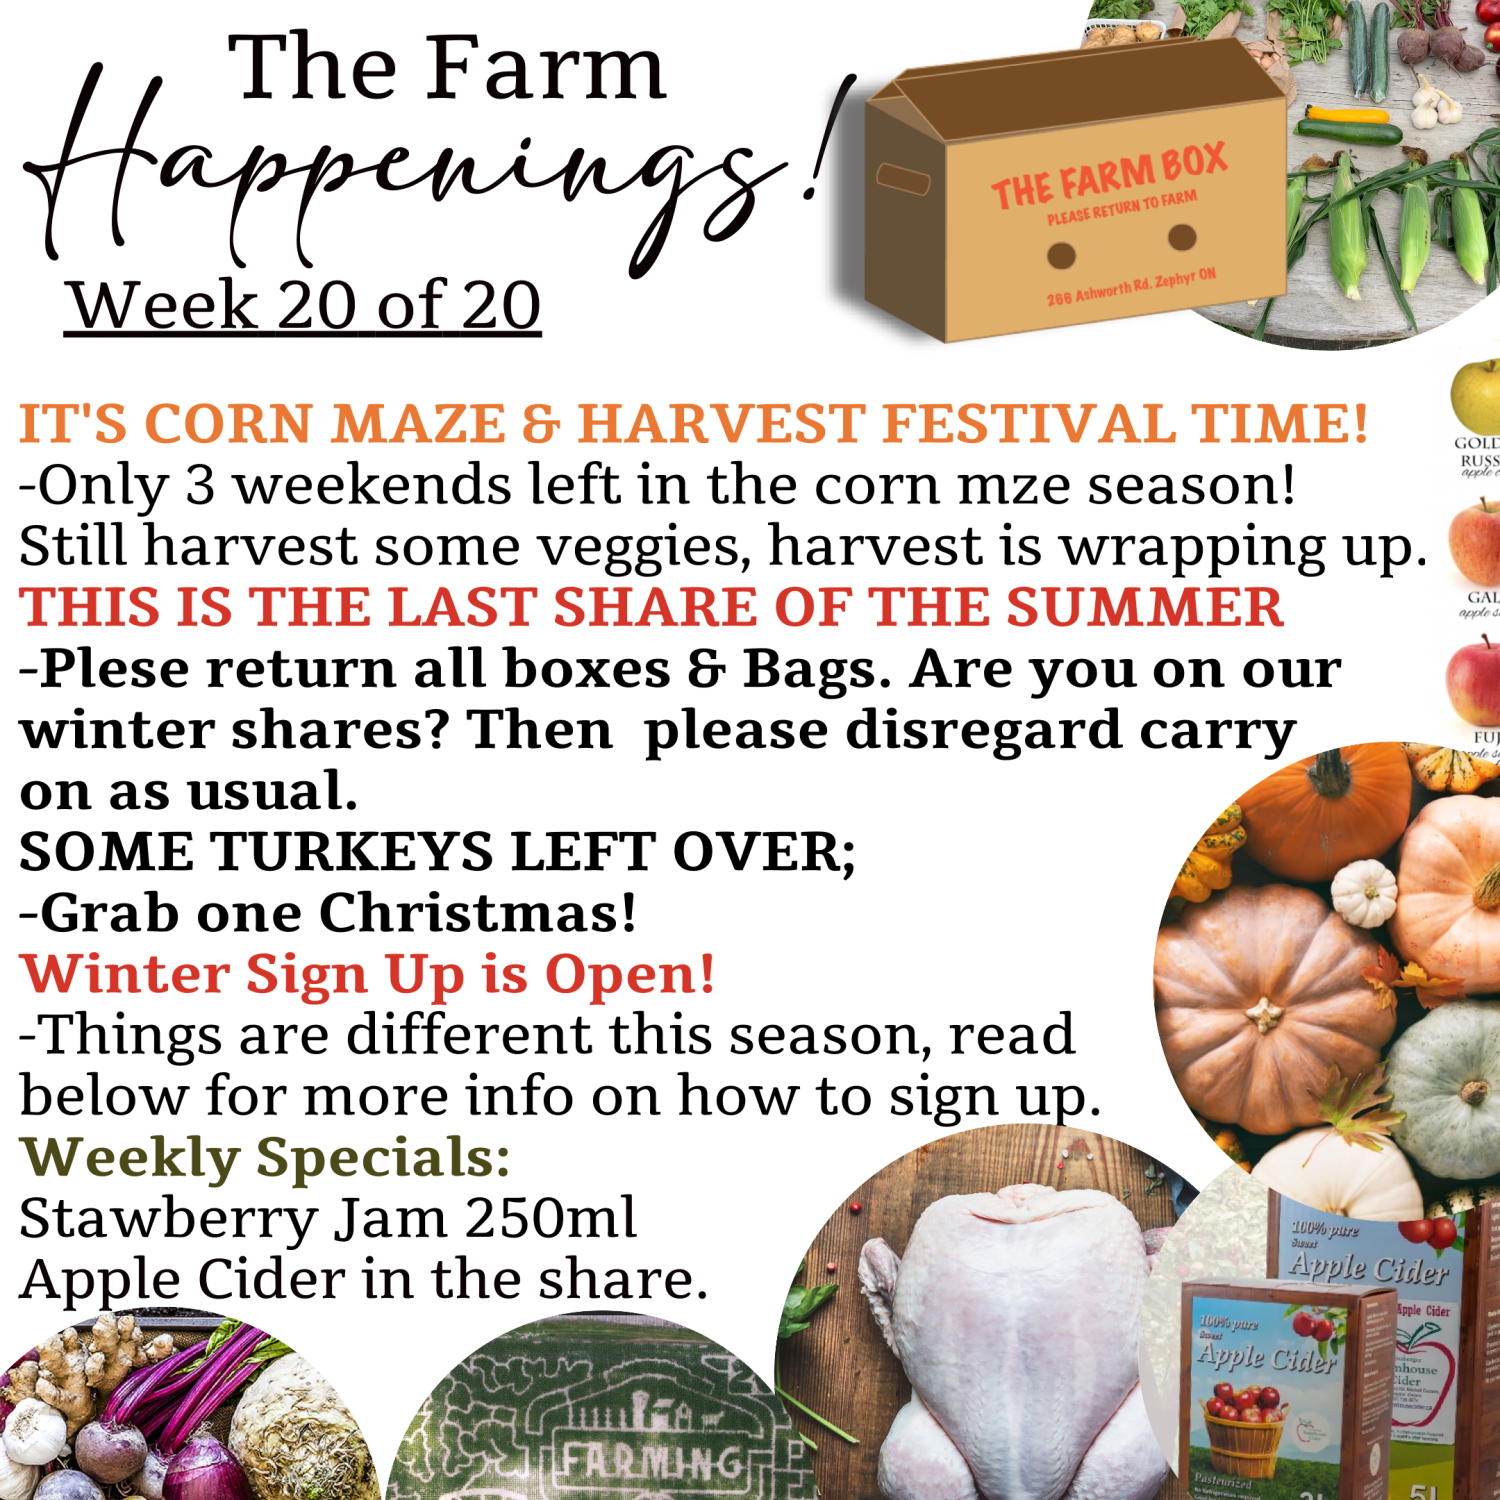 Previous Happening: "The Farm Box"-Coopers CSA Farm Farm Happenings Week 20